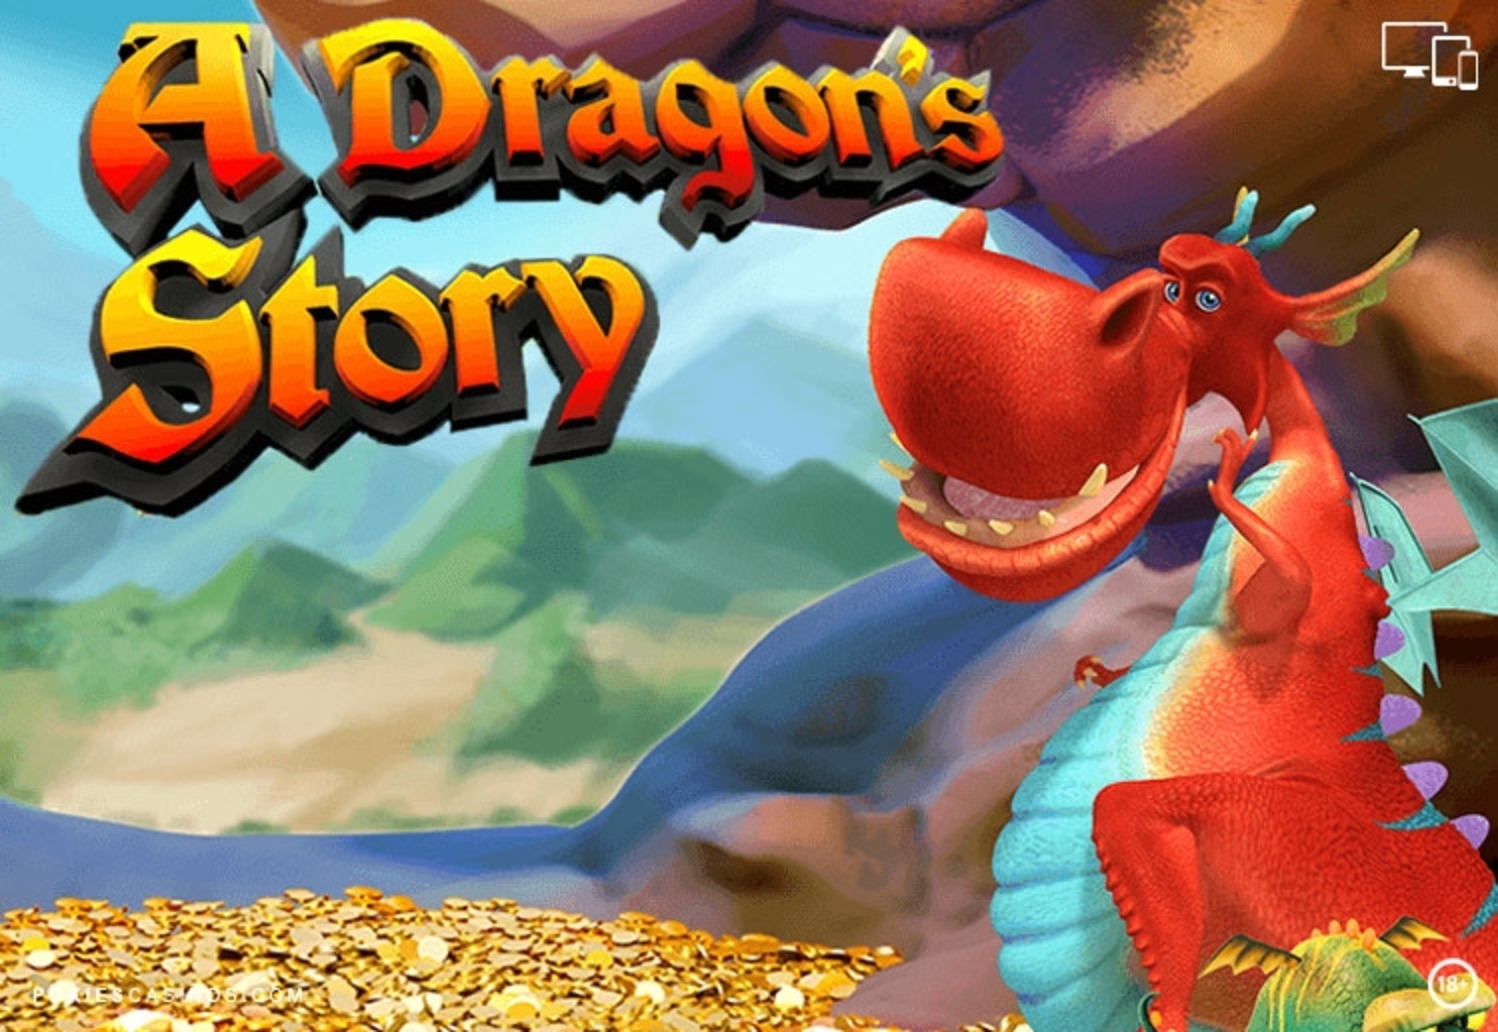 A Dragon Story demo